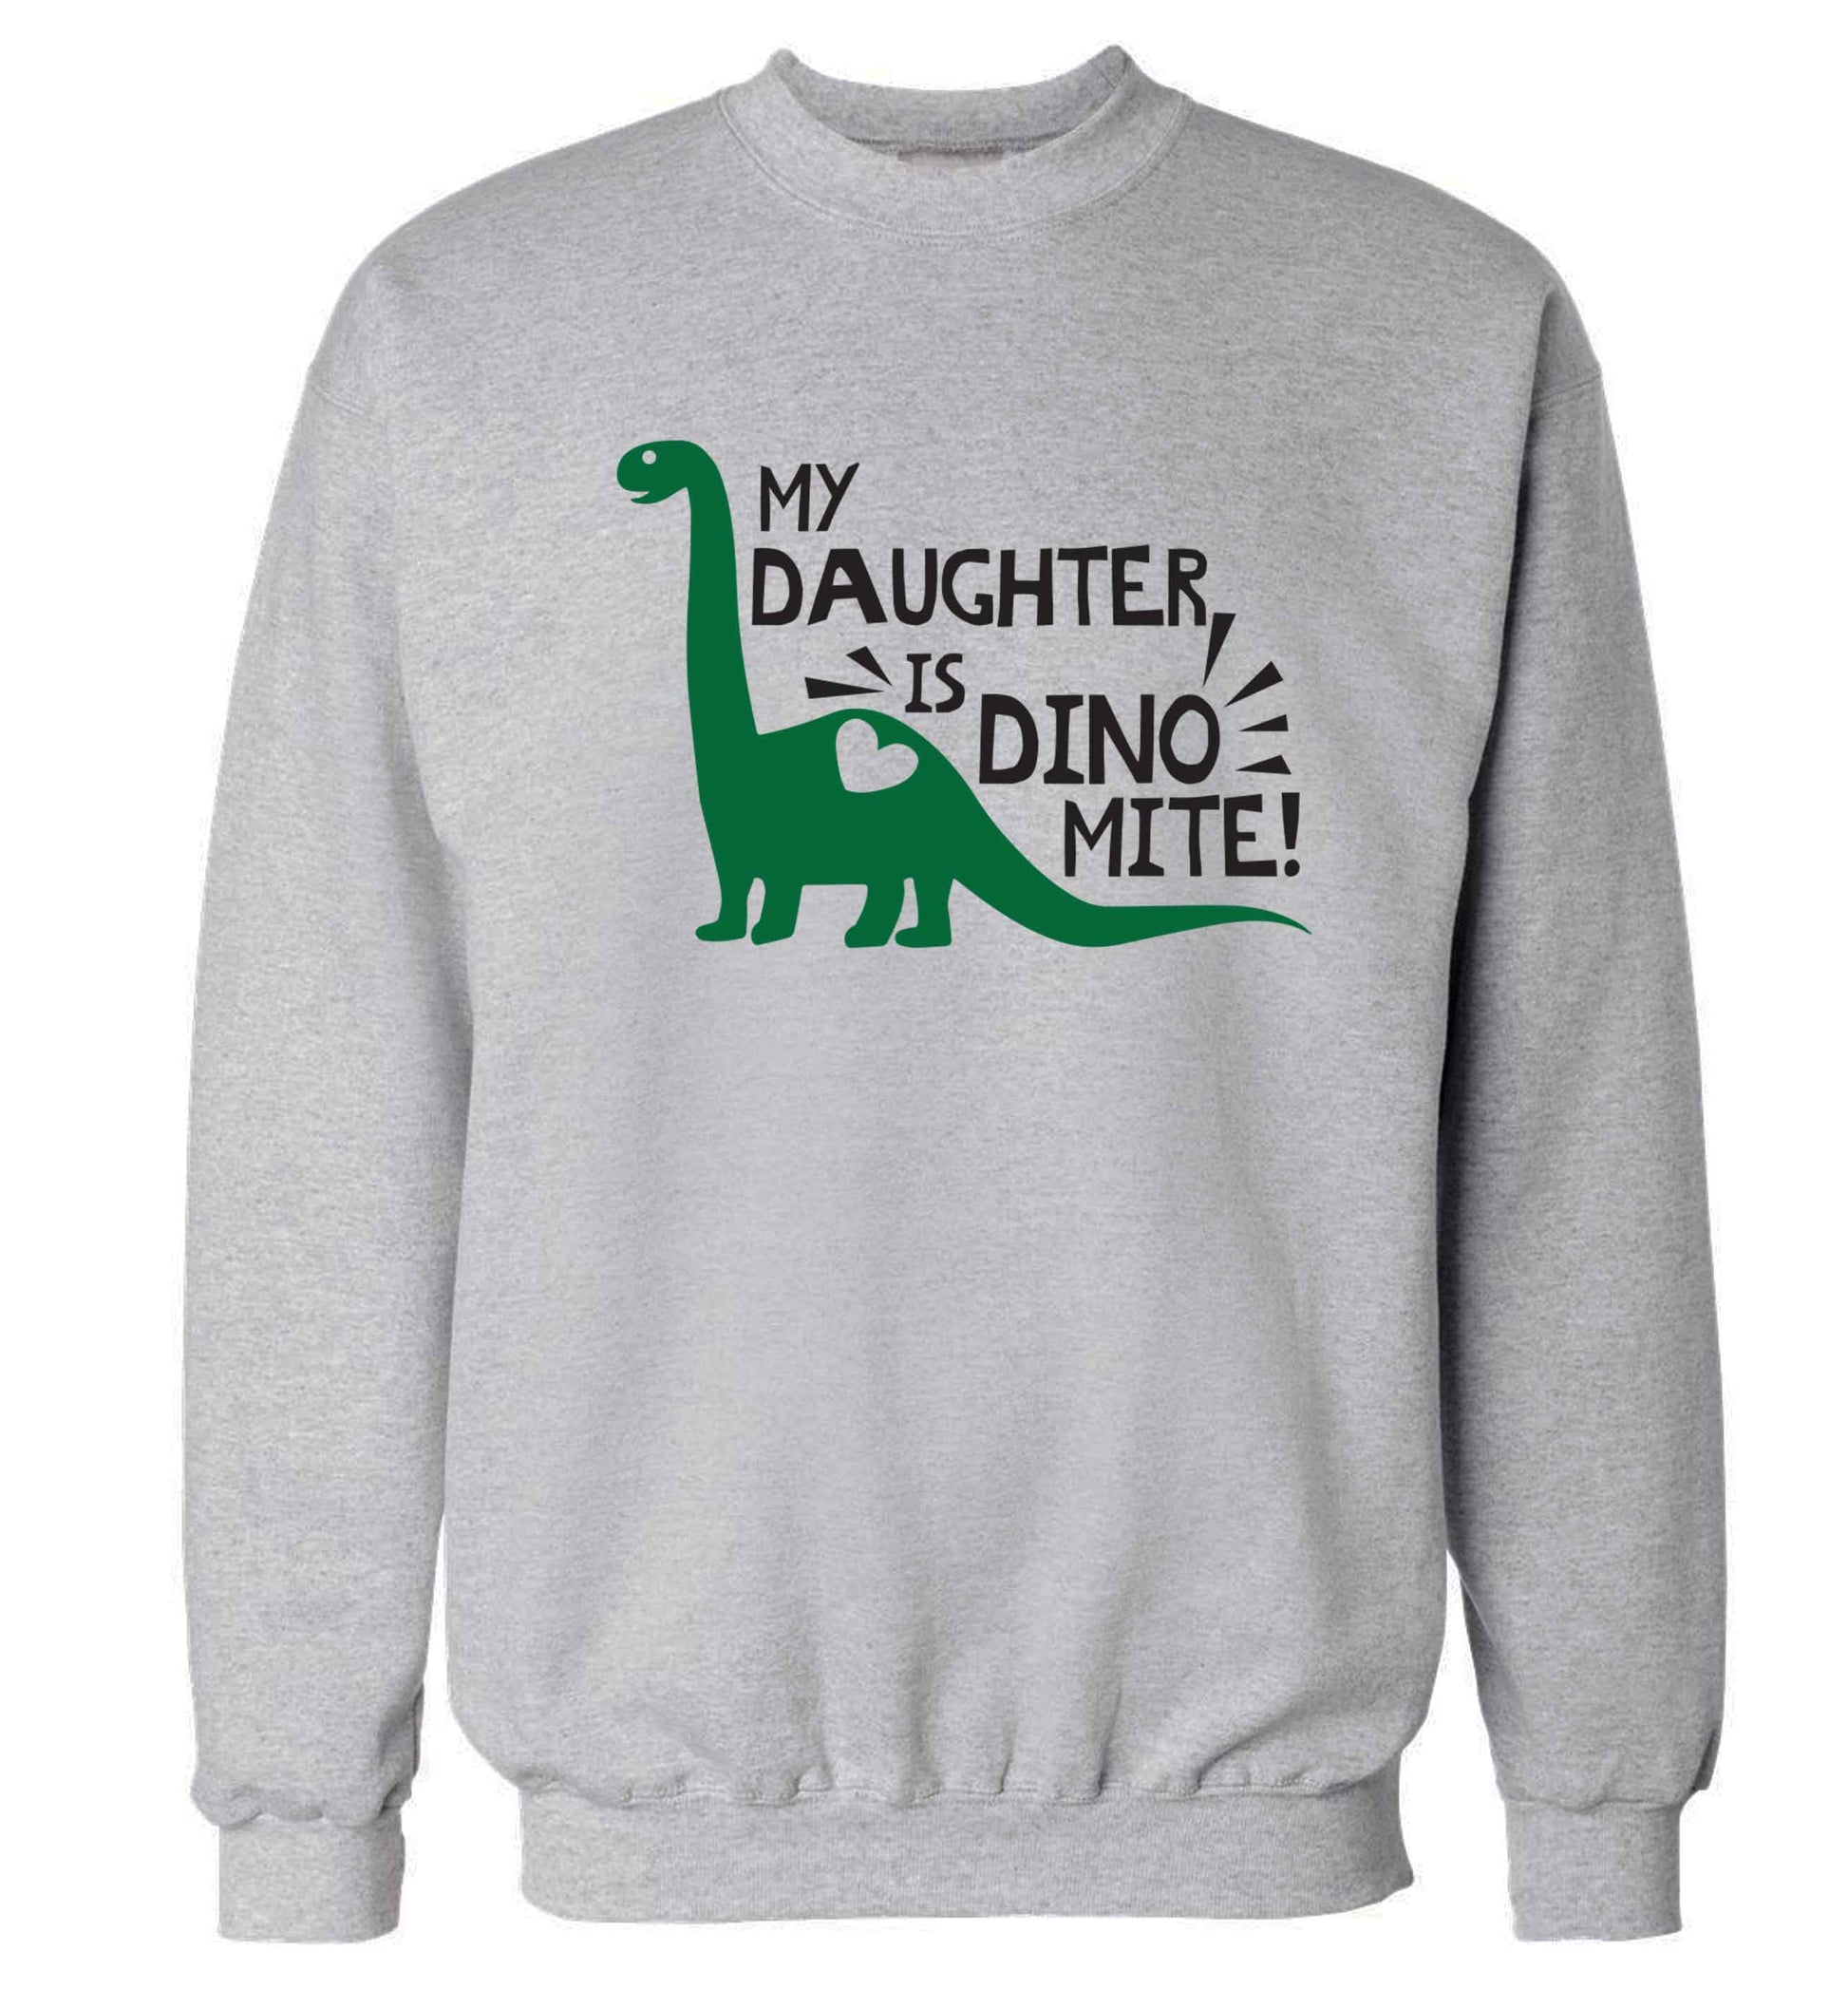 My daughter is dinomite! Adult's unisex grey Sweater 2XL